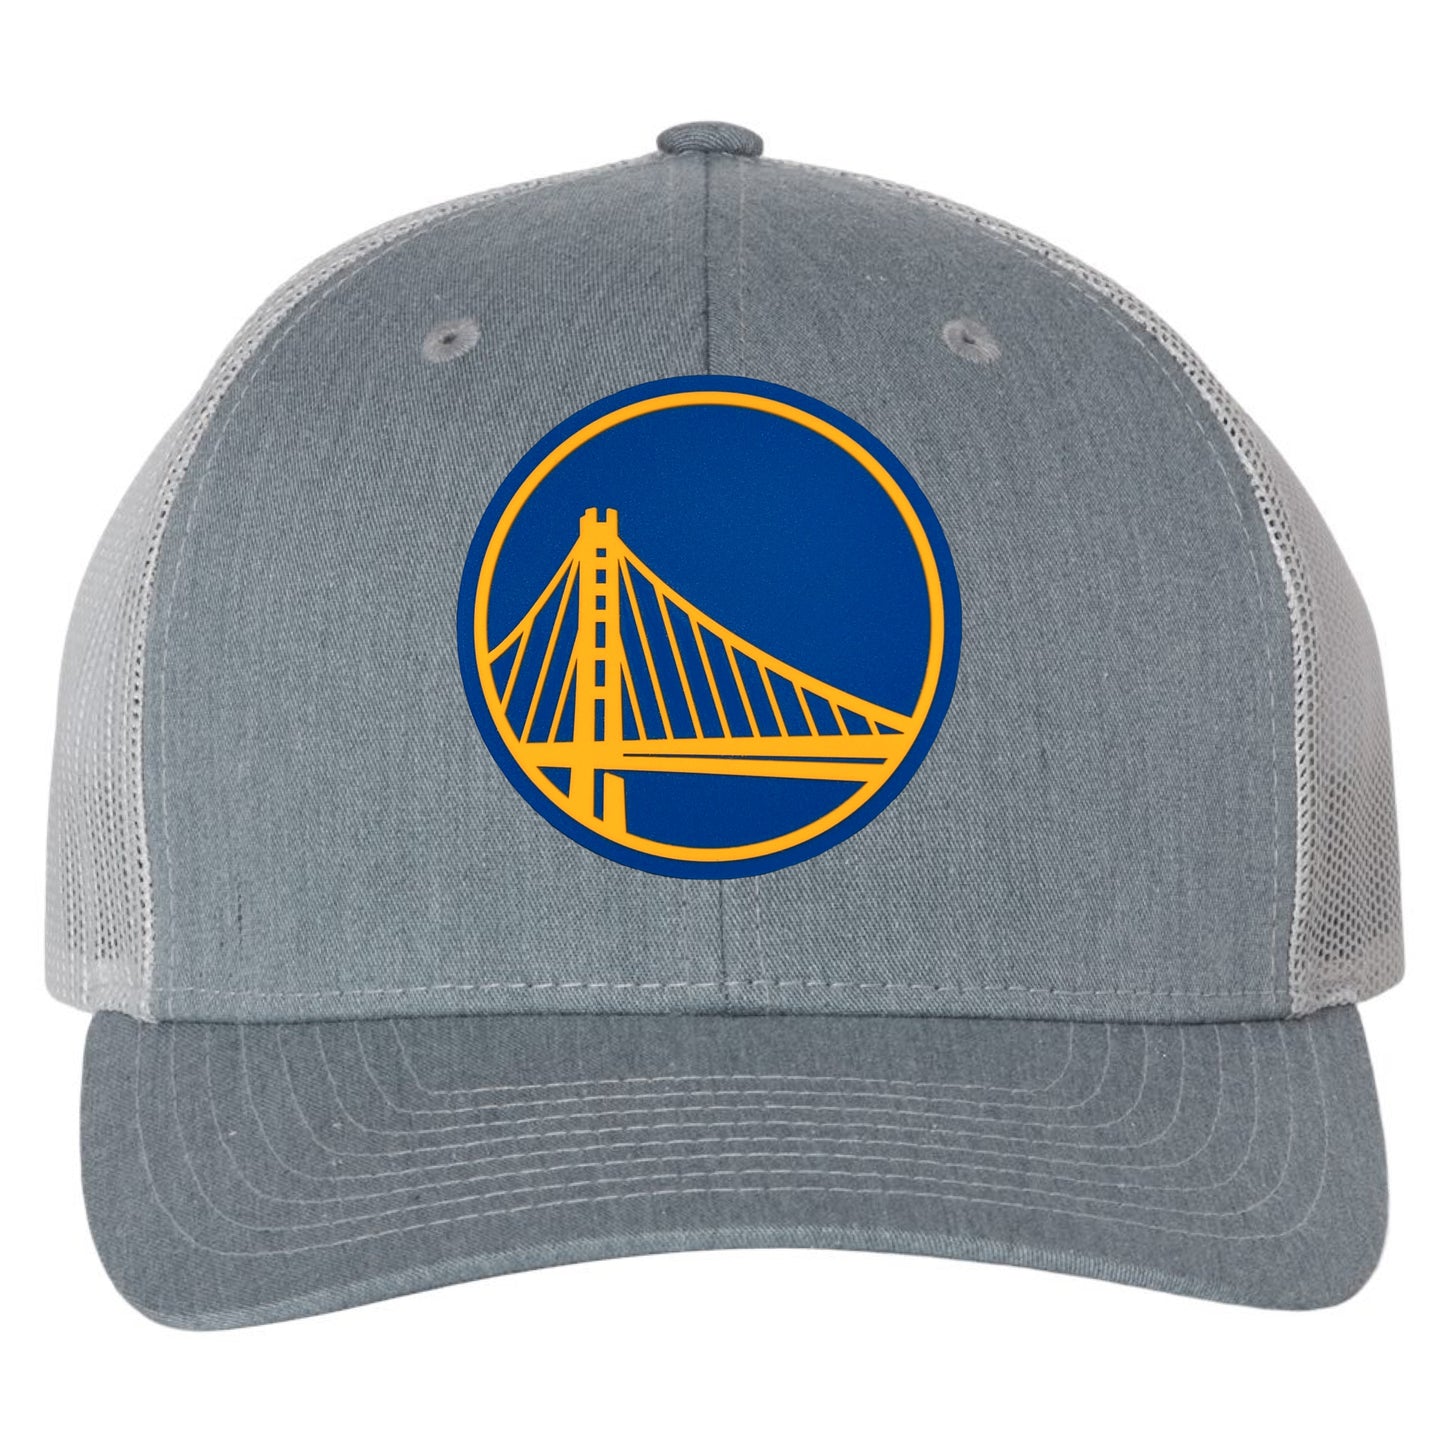 Golden State Warriors 3D Snapback Trucker Hat- Heather Grey/ Light Grey - Ten Gallon Hat Co.